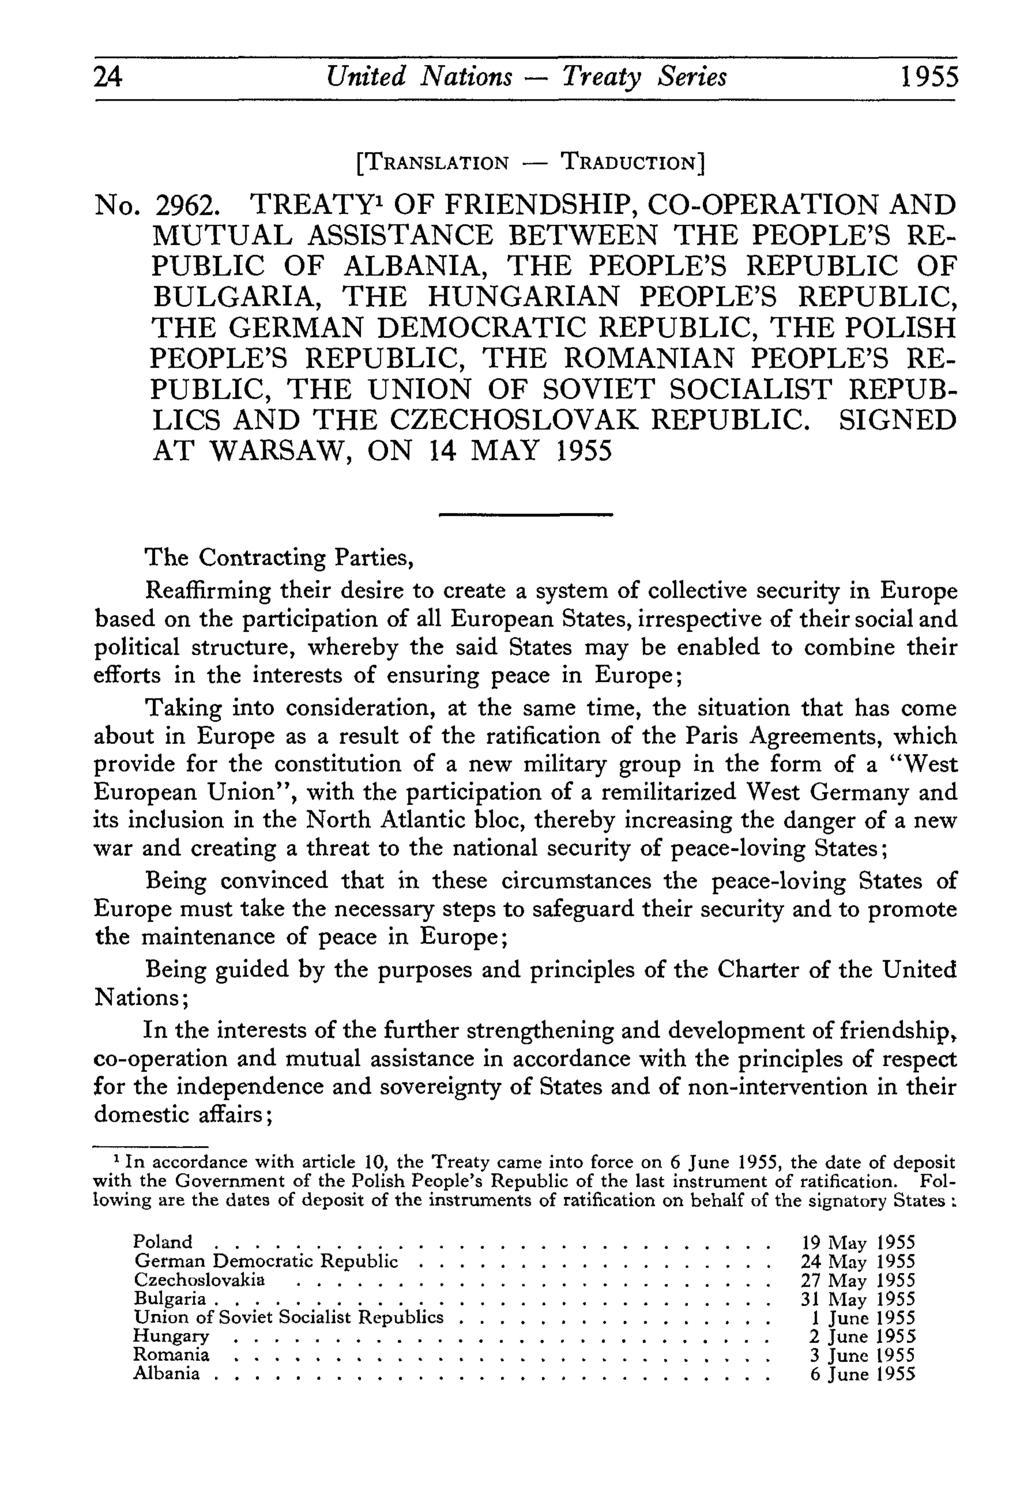 24 United Nations Treaty Series 1955 [TRANSLATION TRADUCTION].